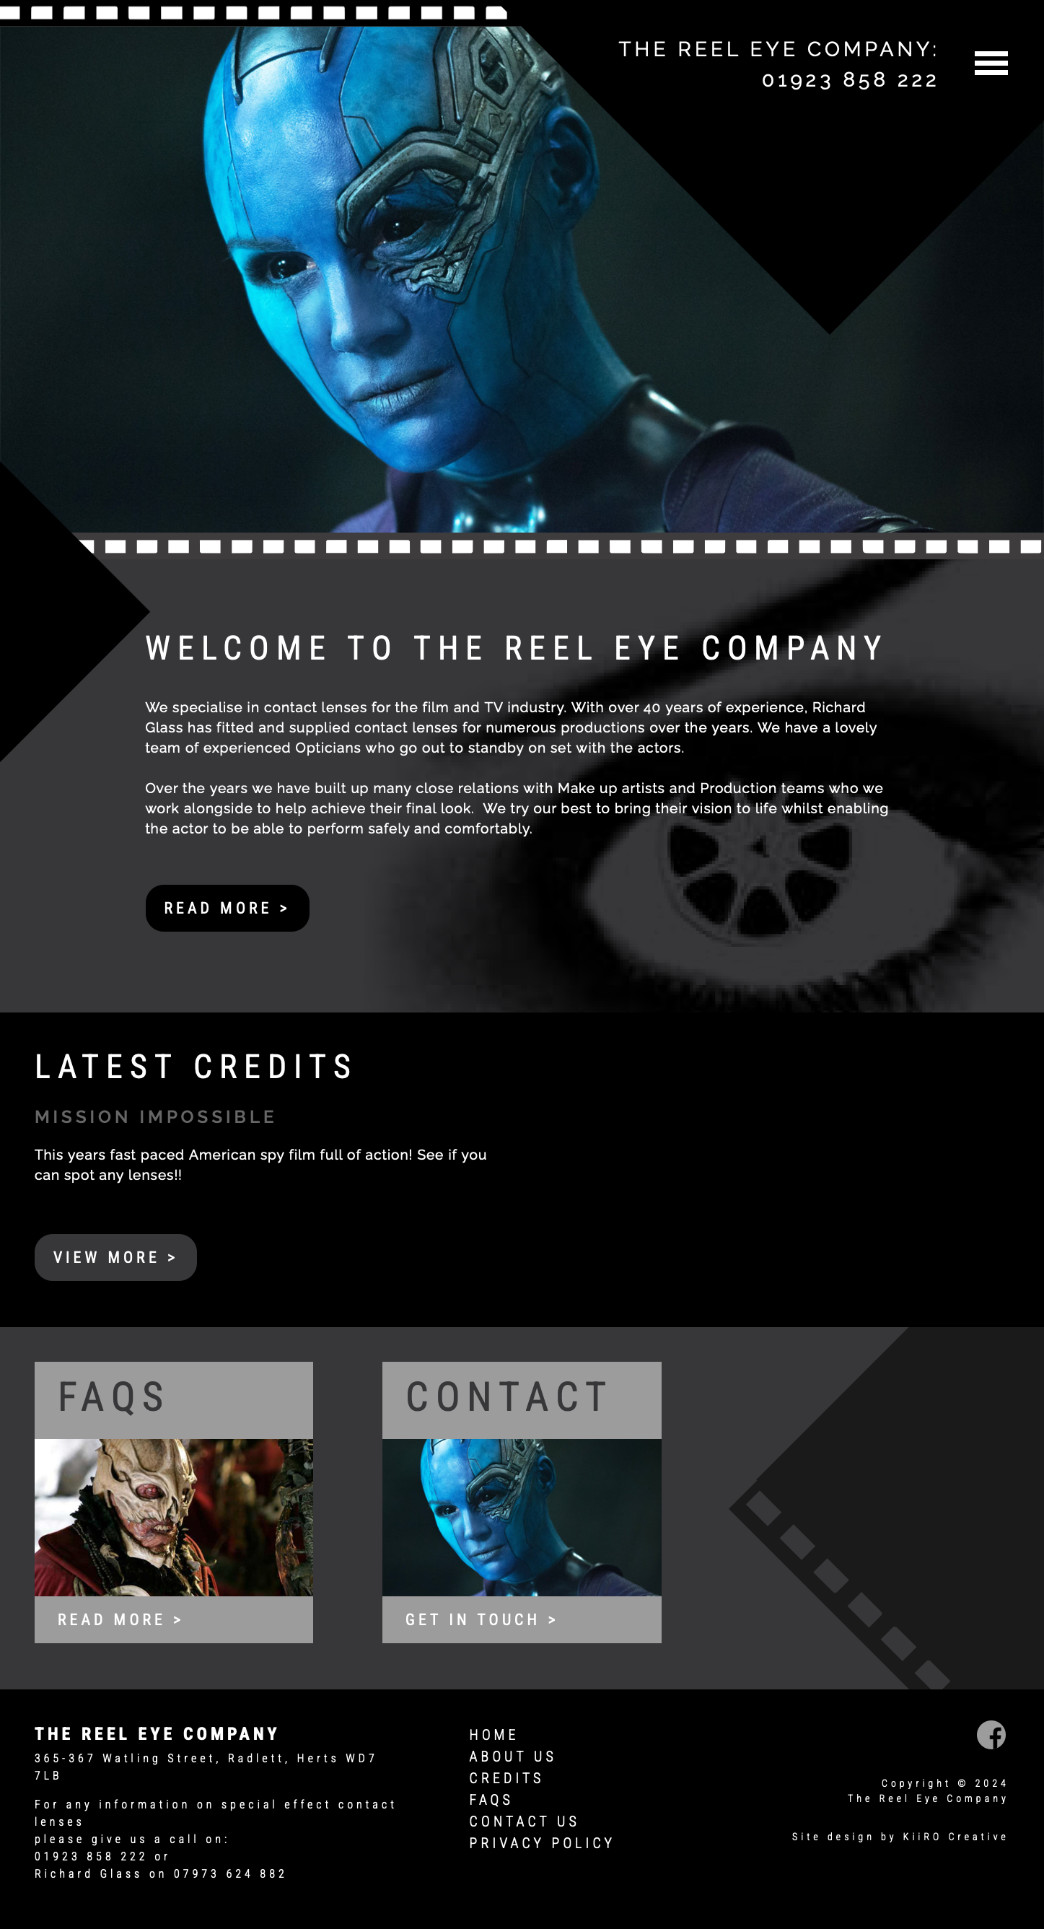 The Reel Eye Company